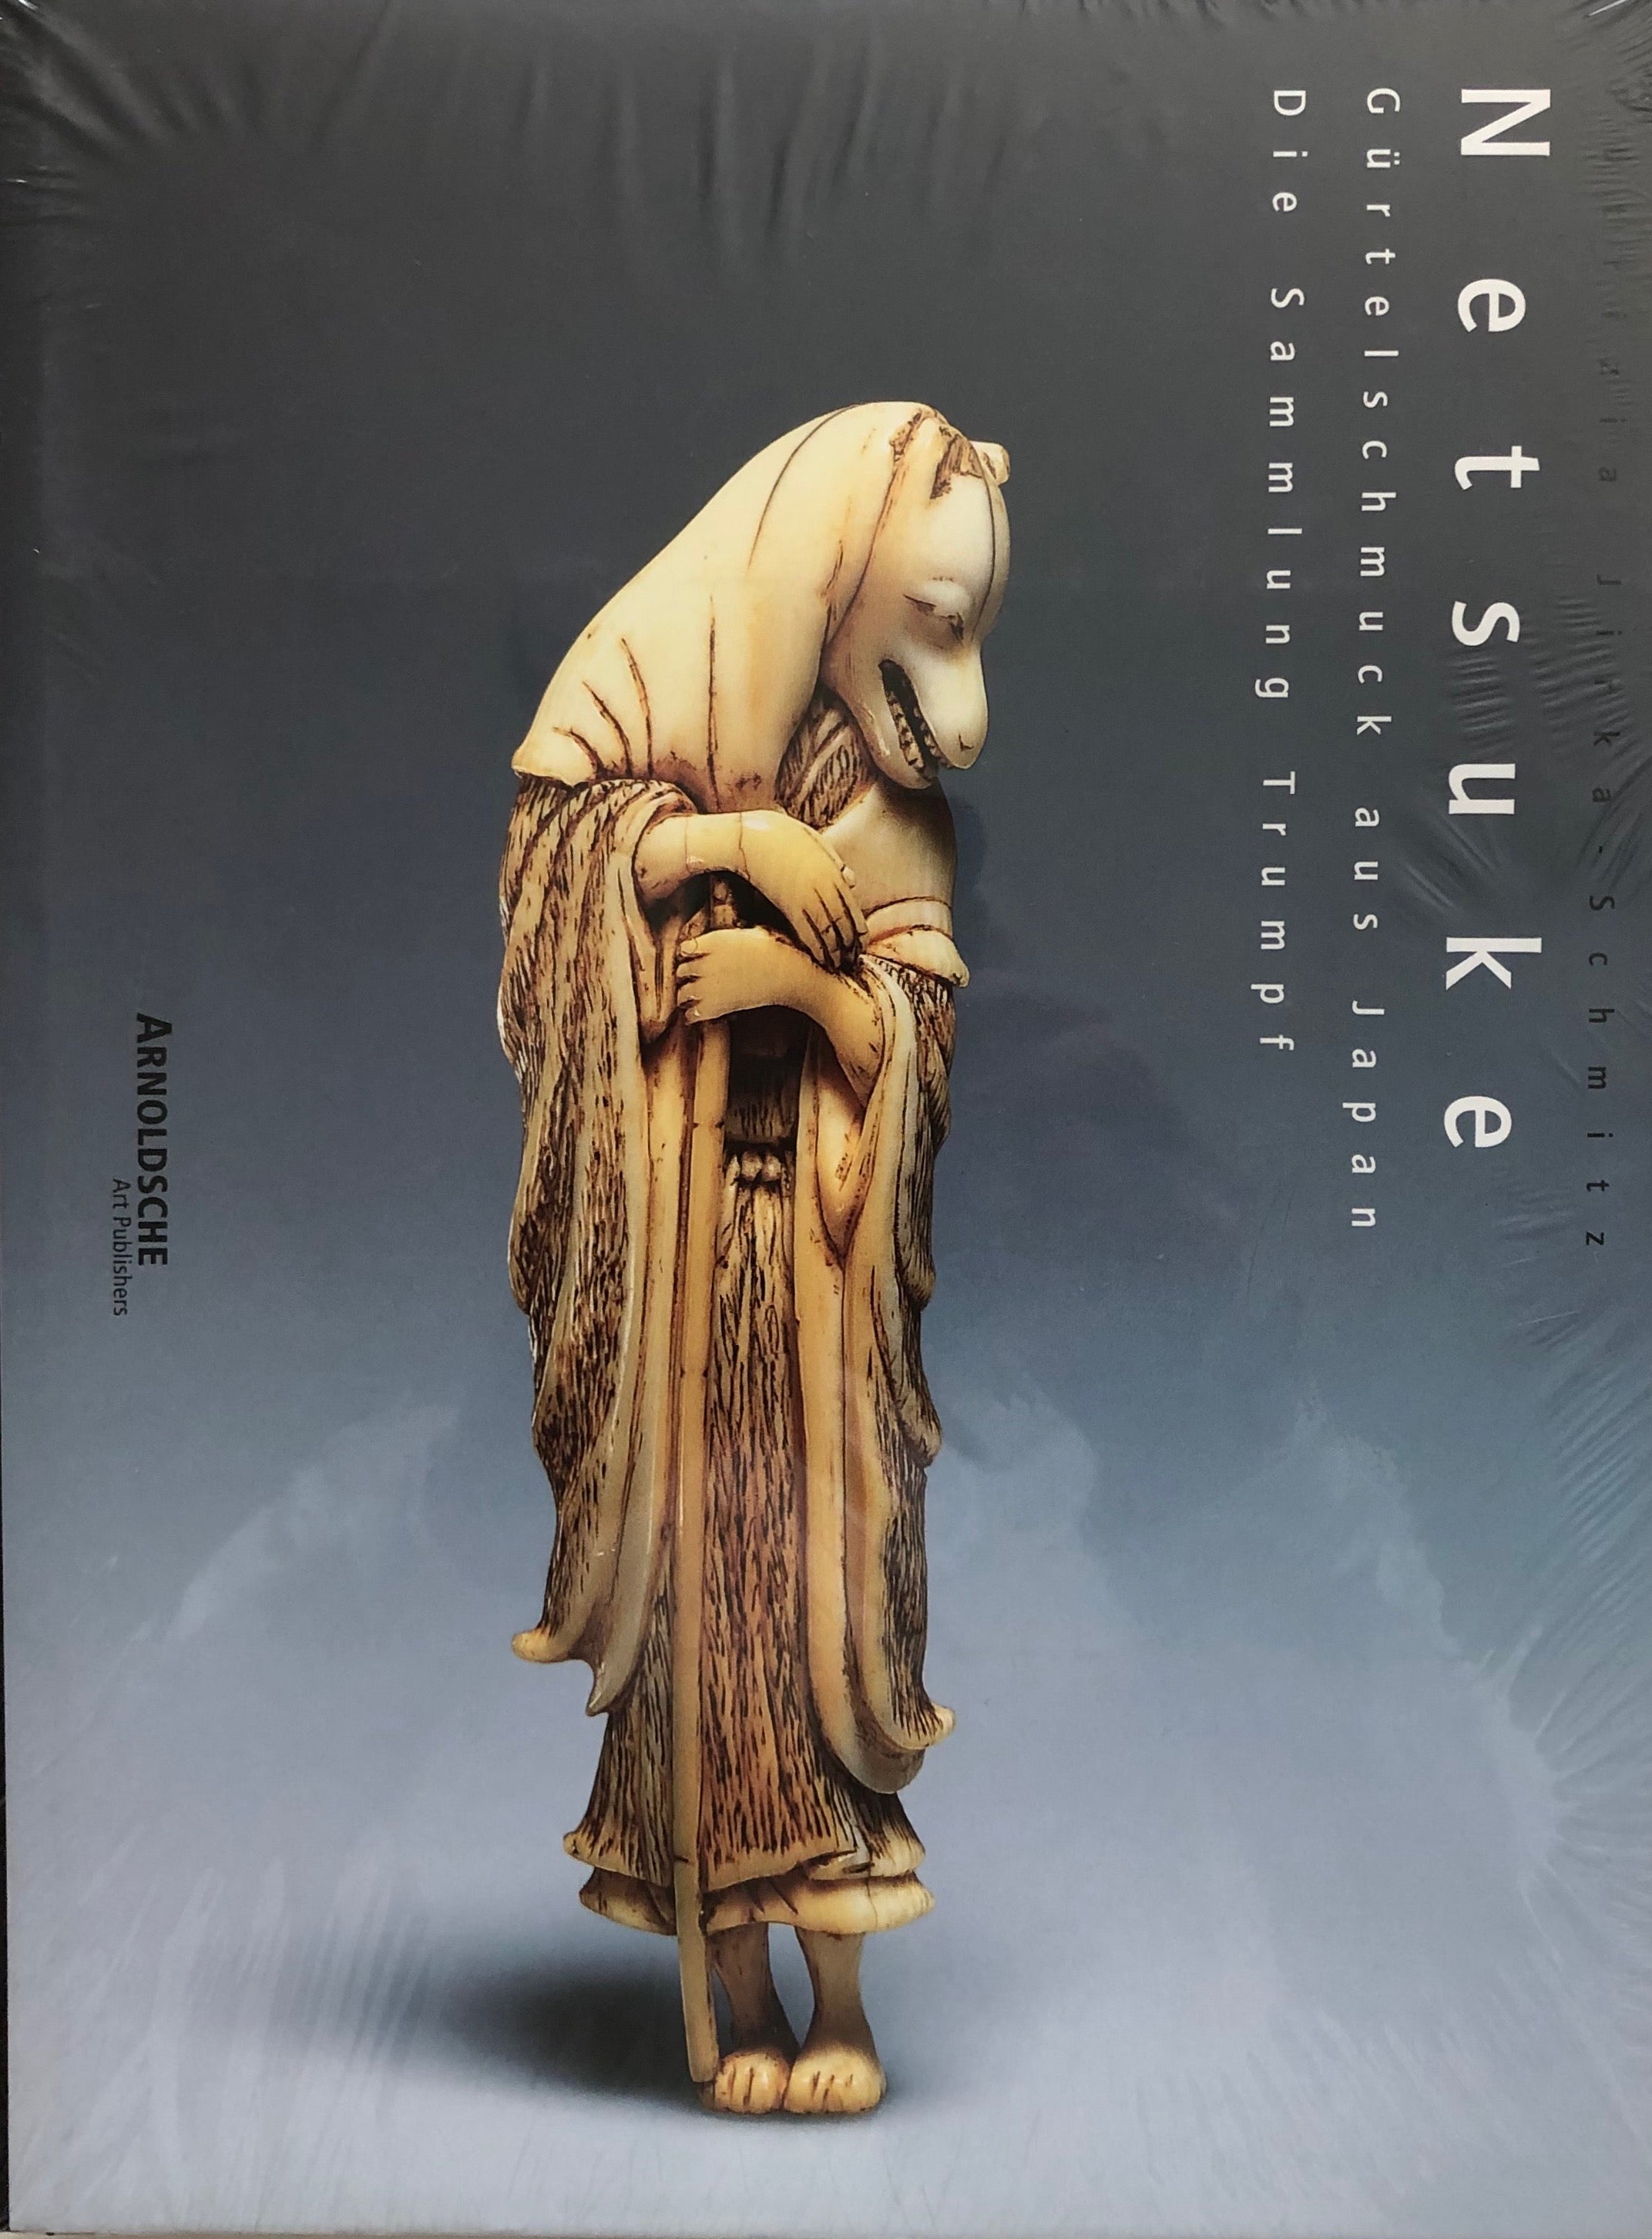 Netsuke Vol II Four Centuries of Masterpieces: The Four Centuries of Masterpieces — The Trump Collection (German Edition) by Patrizia Jirka-Schmitz